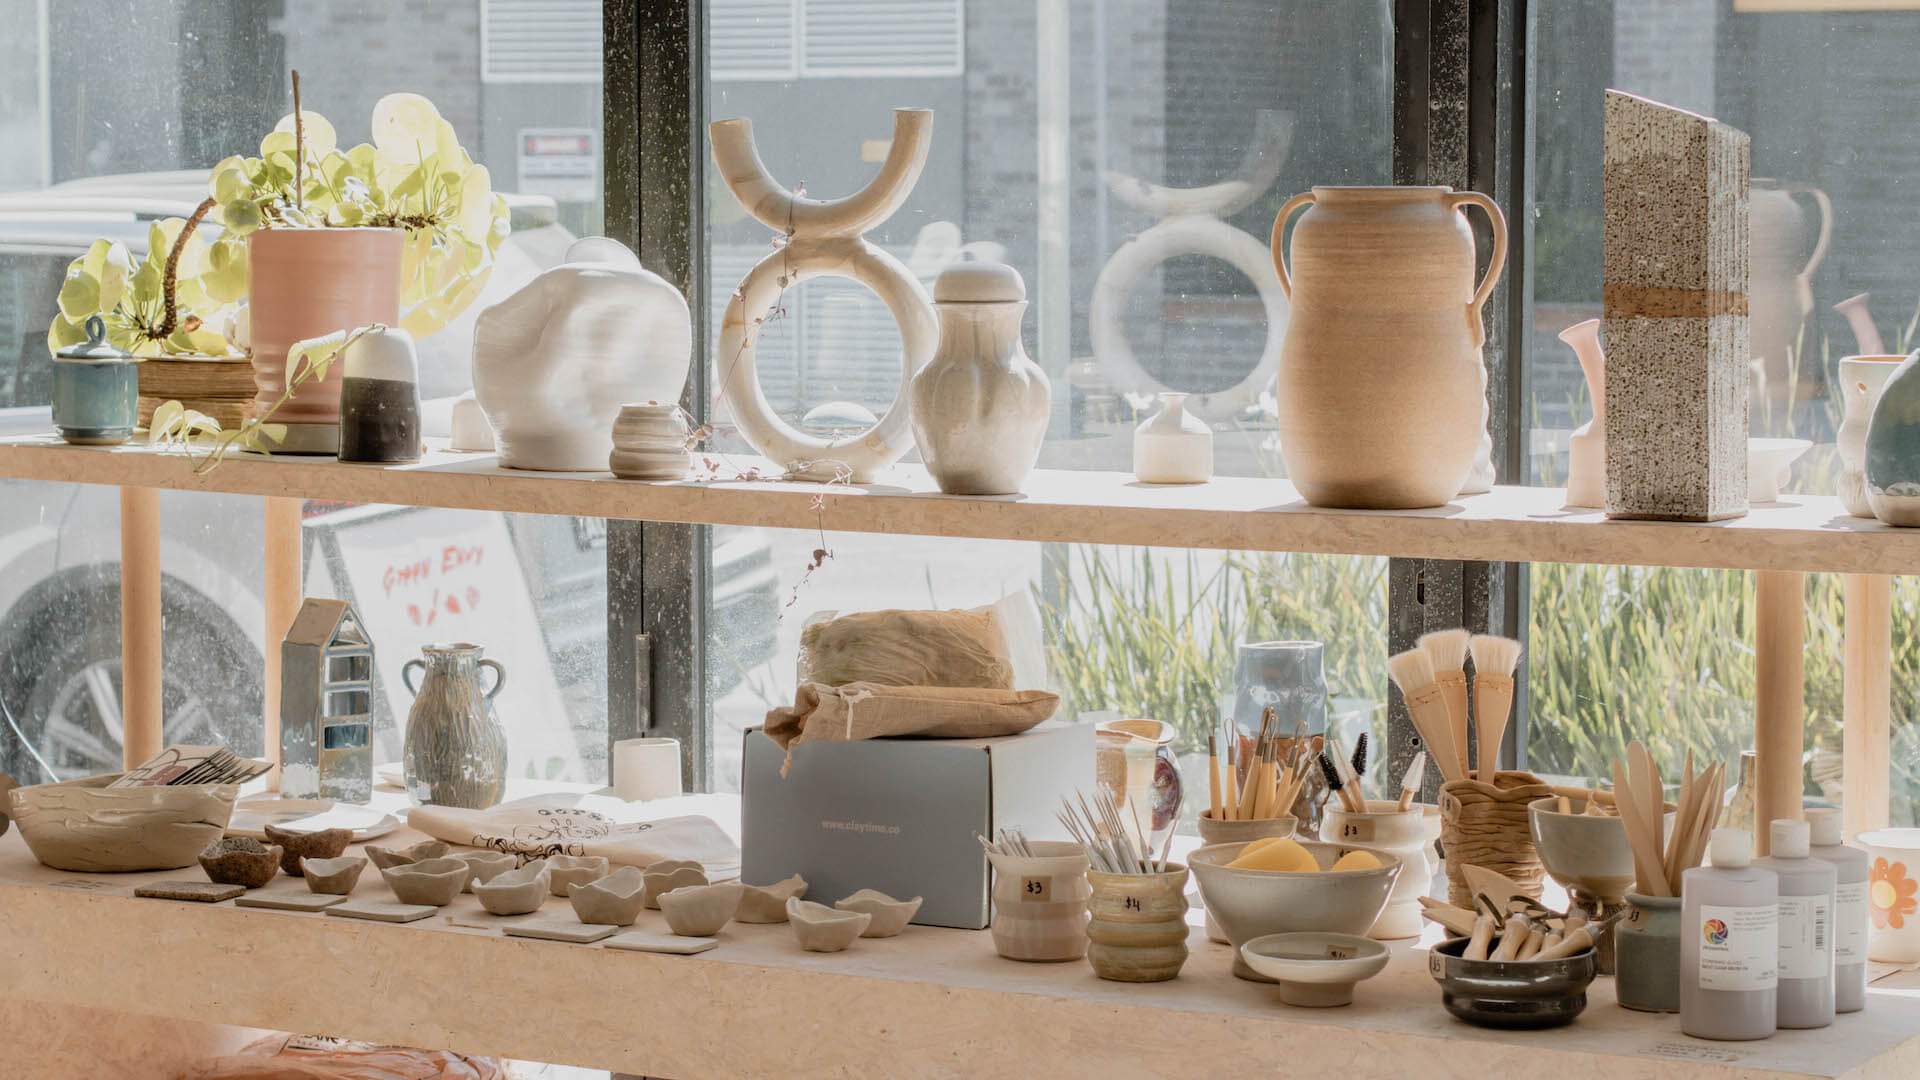 Pottery at Ceramiques studio